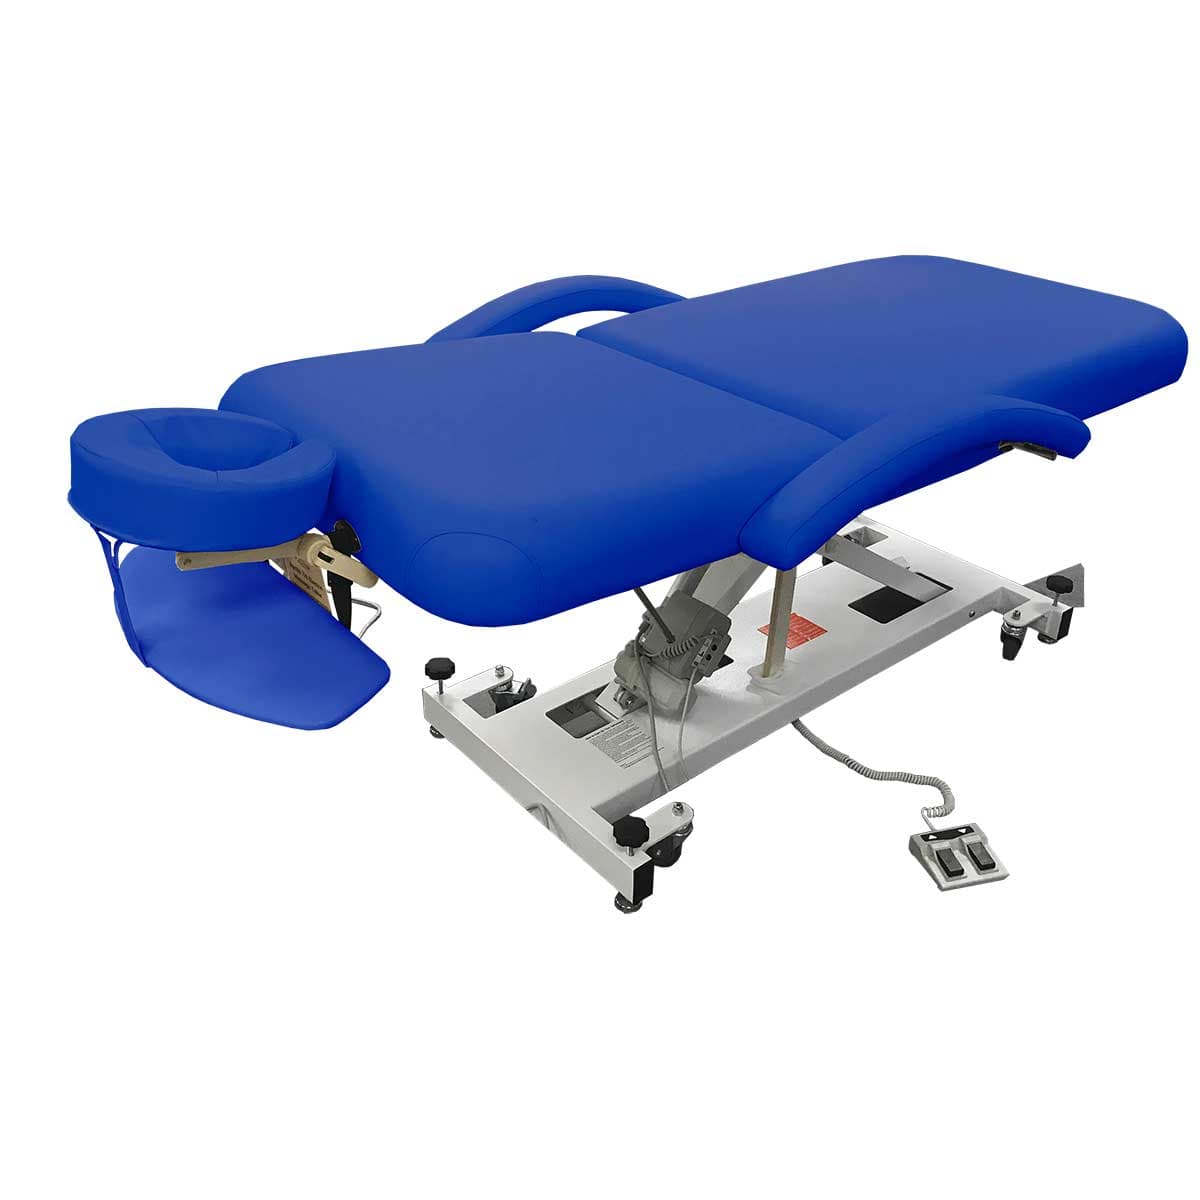 Relaxus Apollo Tilt Electric Massage Table